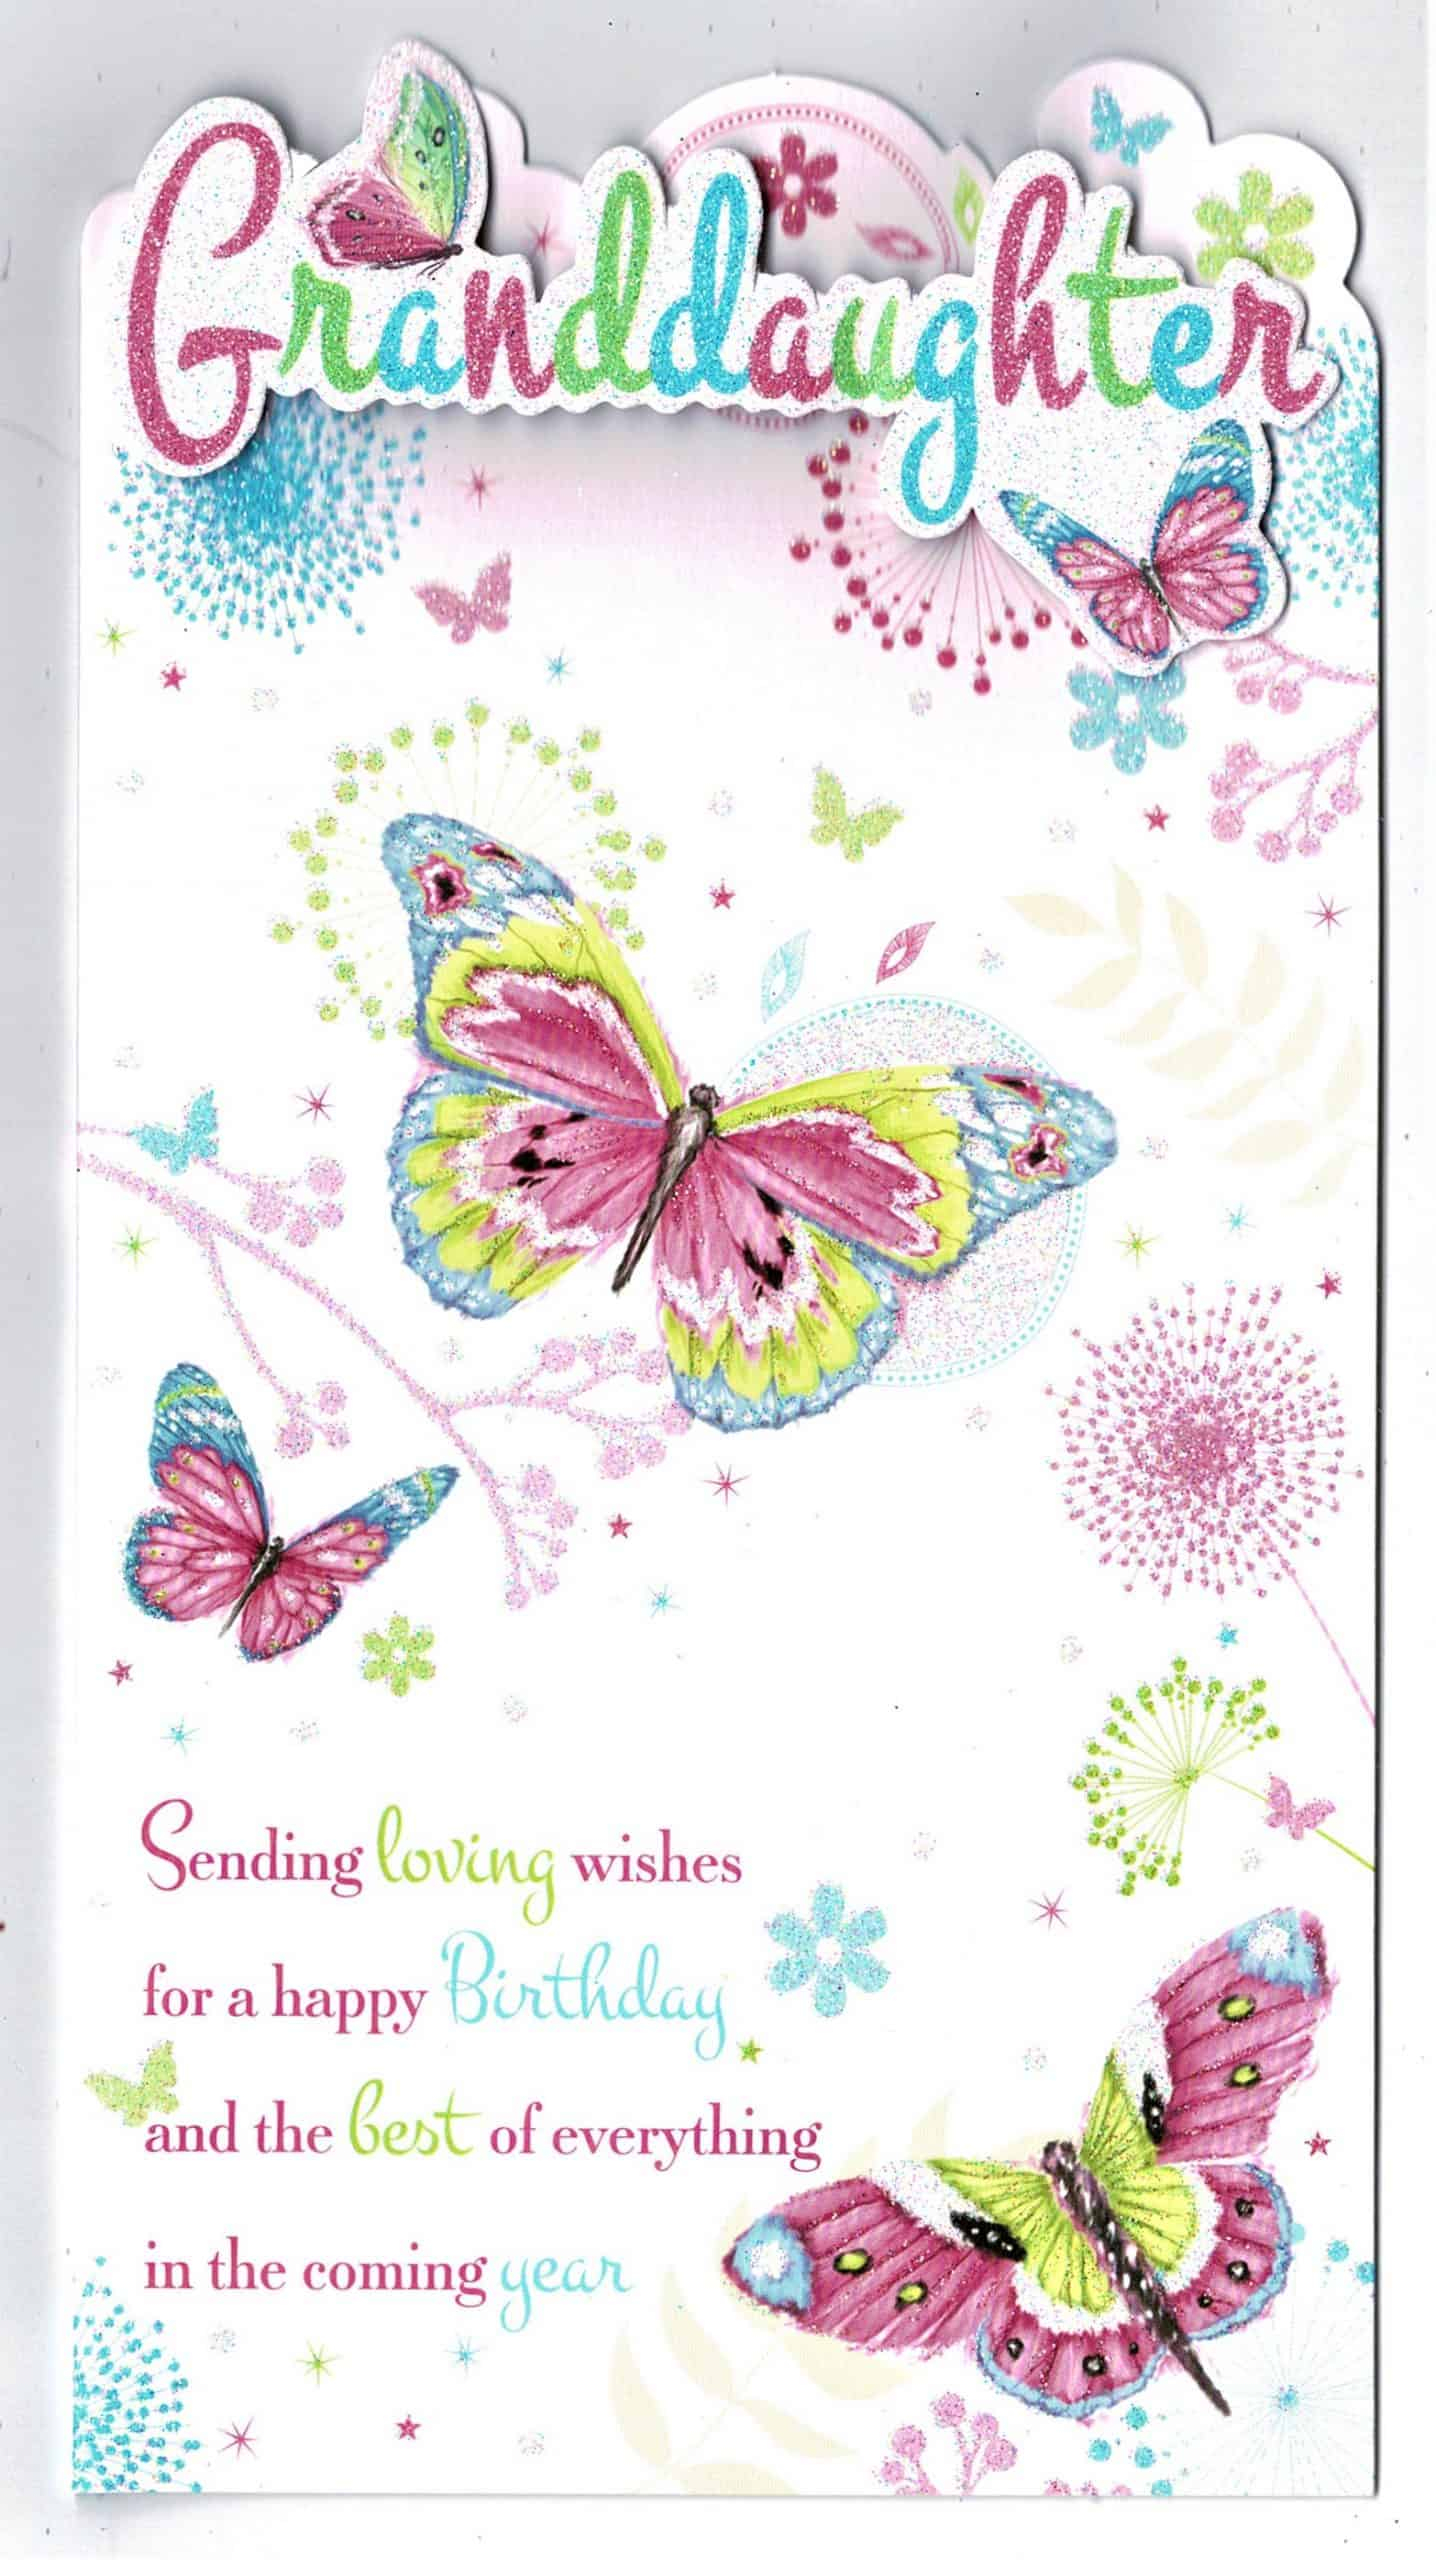 Granddaughter Birthday Card Granddaughter Sending Loving Wishes For A 